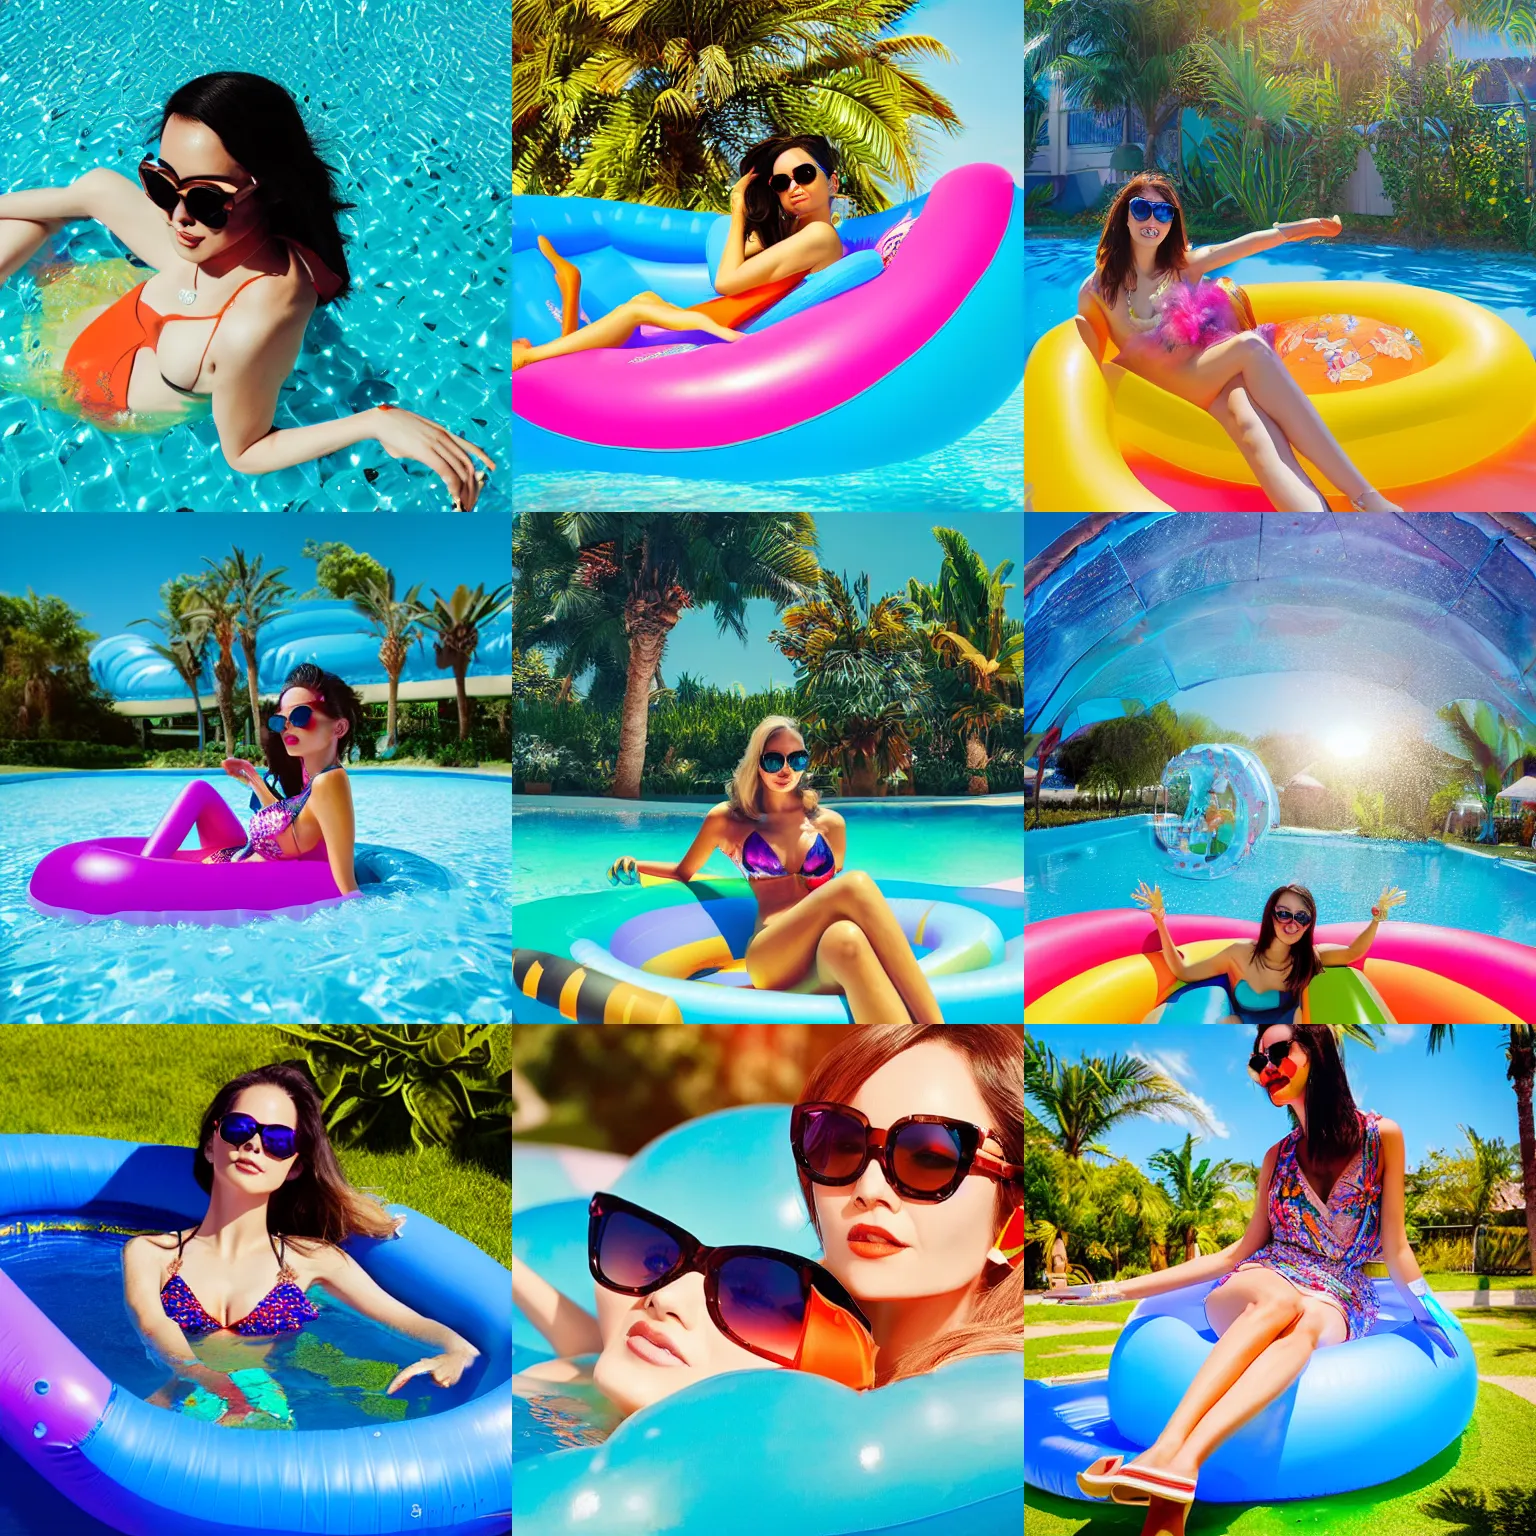 Prompt: an elegant woman with sunglasses in an inflatable pool, vivid colors, bokeh, medium shot, painted by rossdraws, greg rutkowski, thomas kindkade